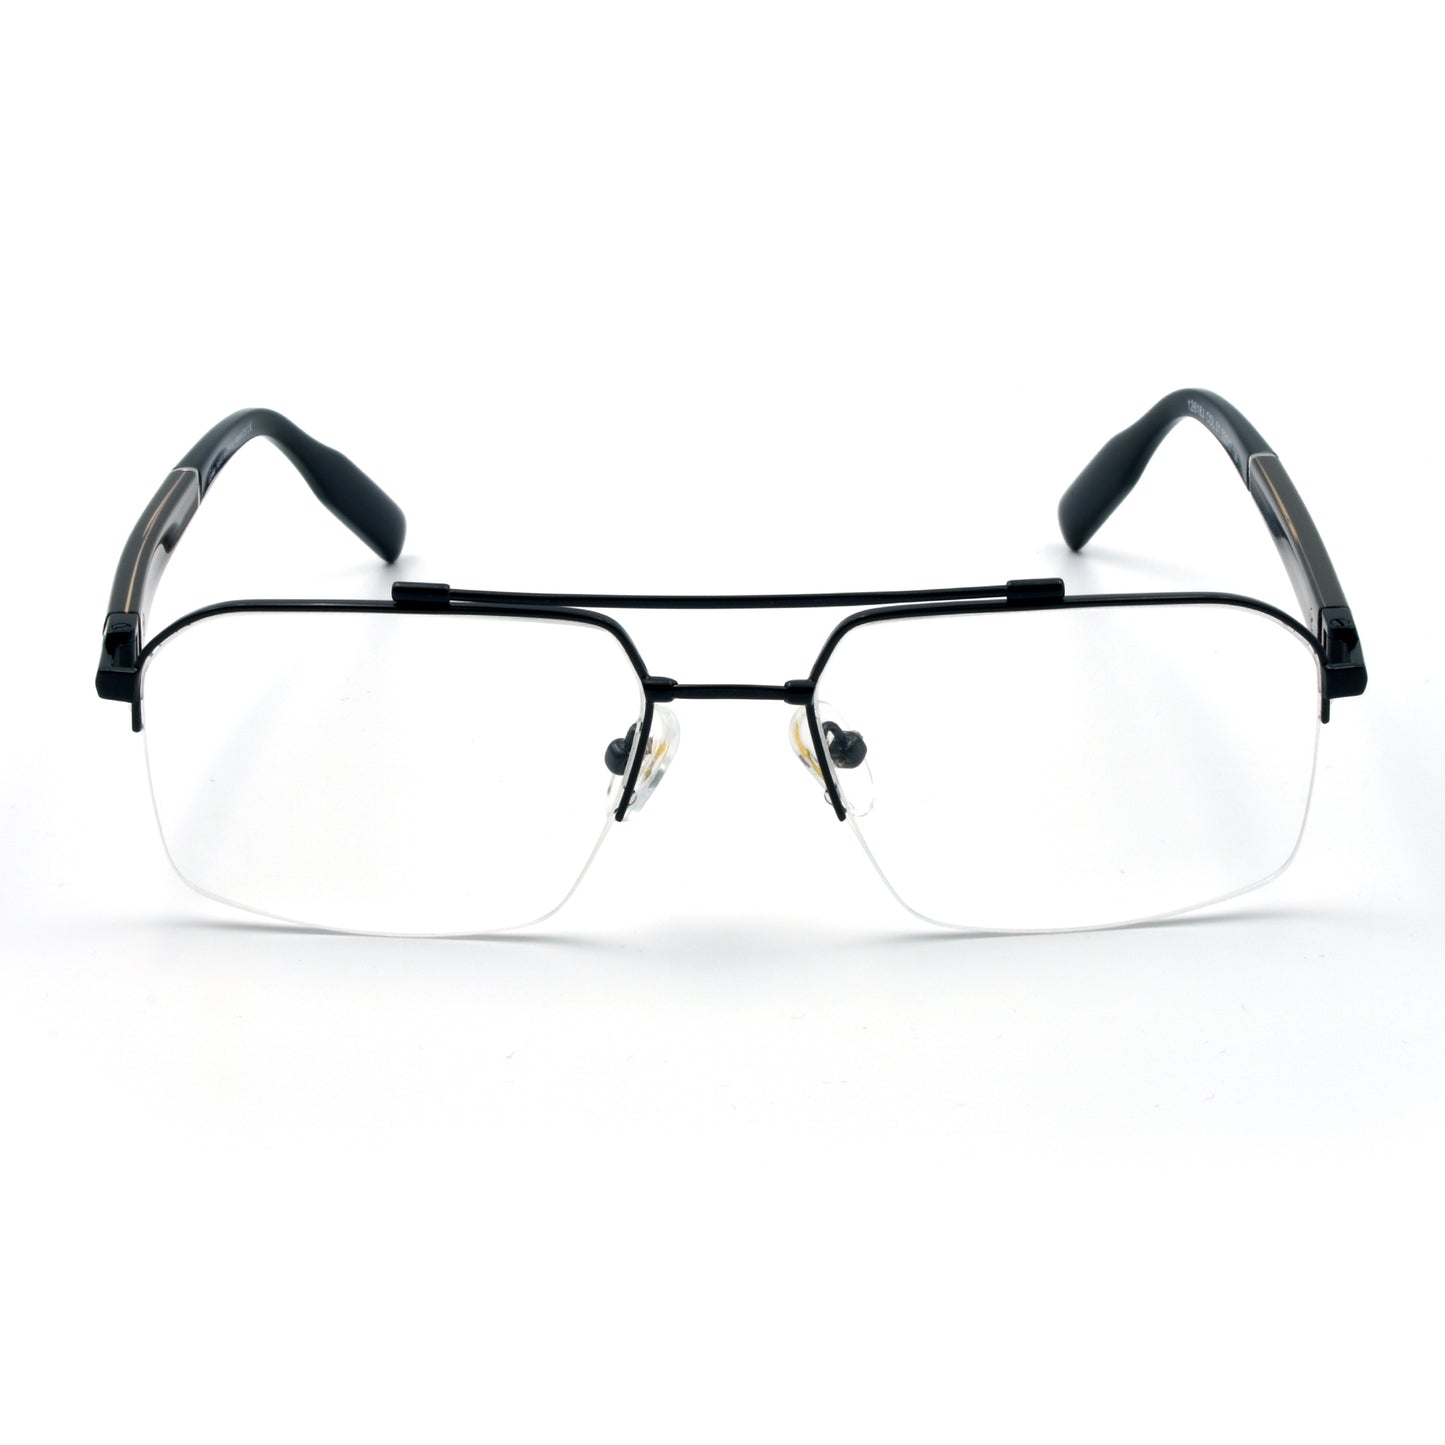 Modern Looking Trendy Stylish Optic Frame | CRTR Frame 12 | Premium Quality